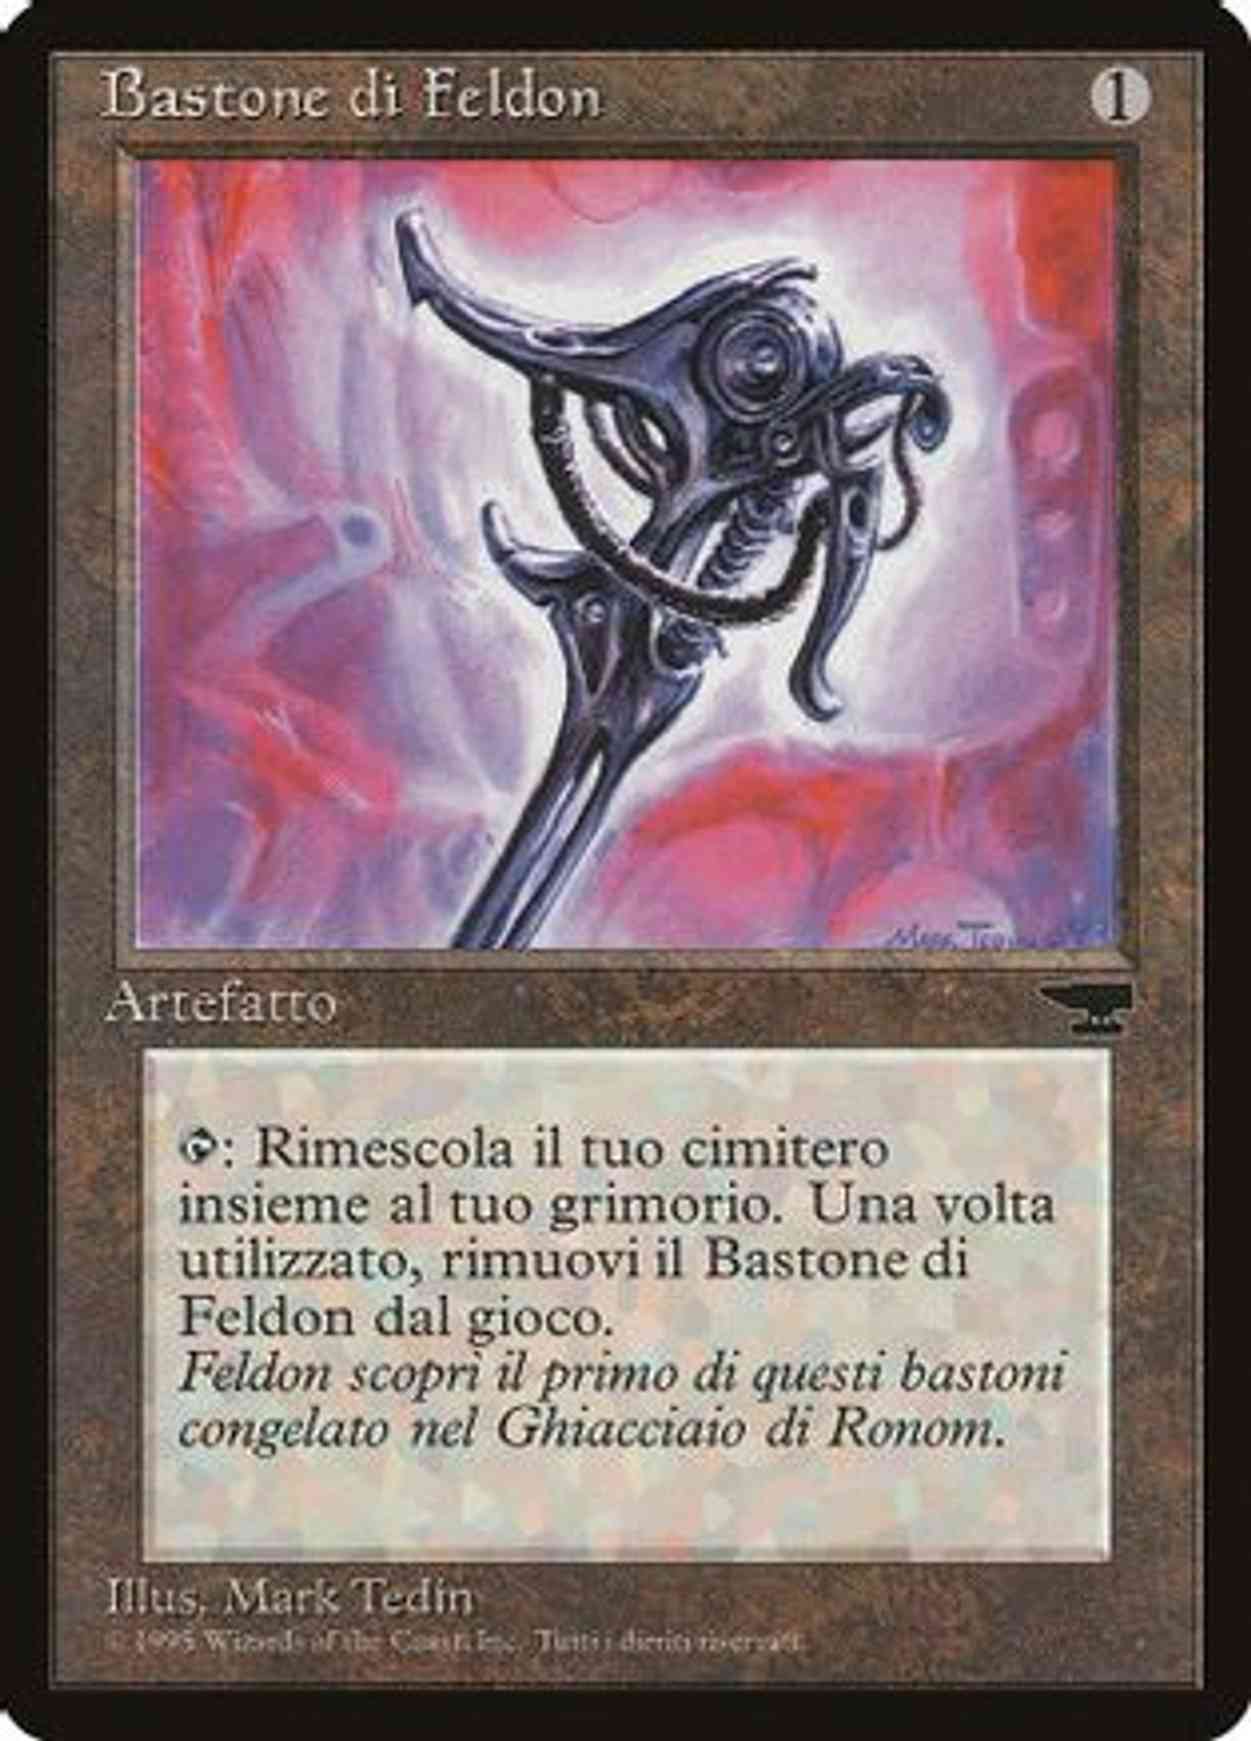 Feldon's Cane (Italian) - "Bastone di Feldon" magic card front